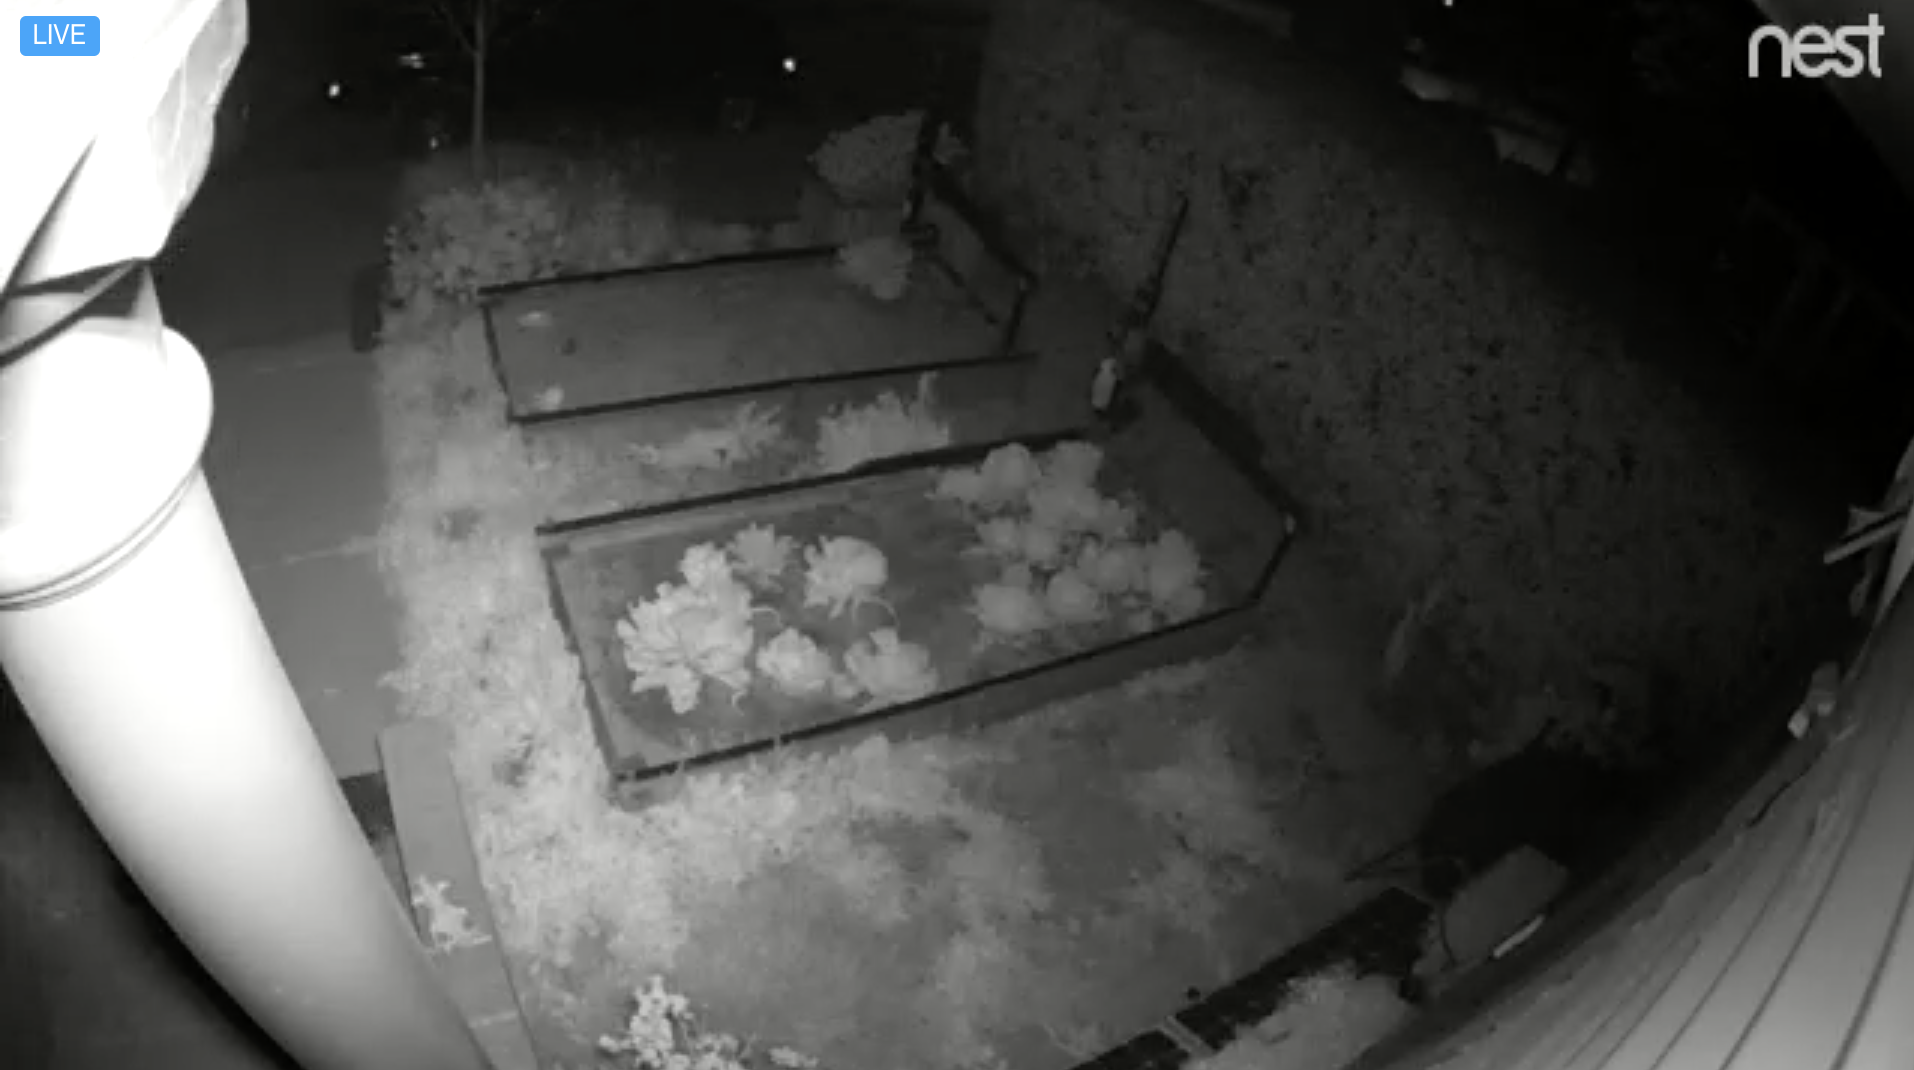 farmbot webcam at night